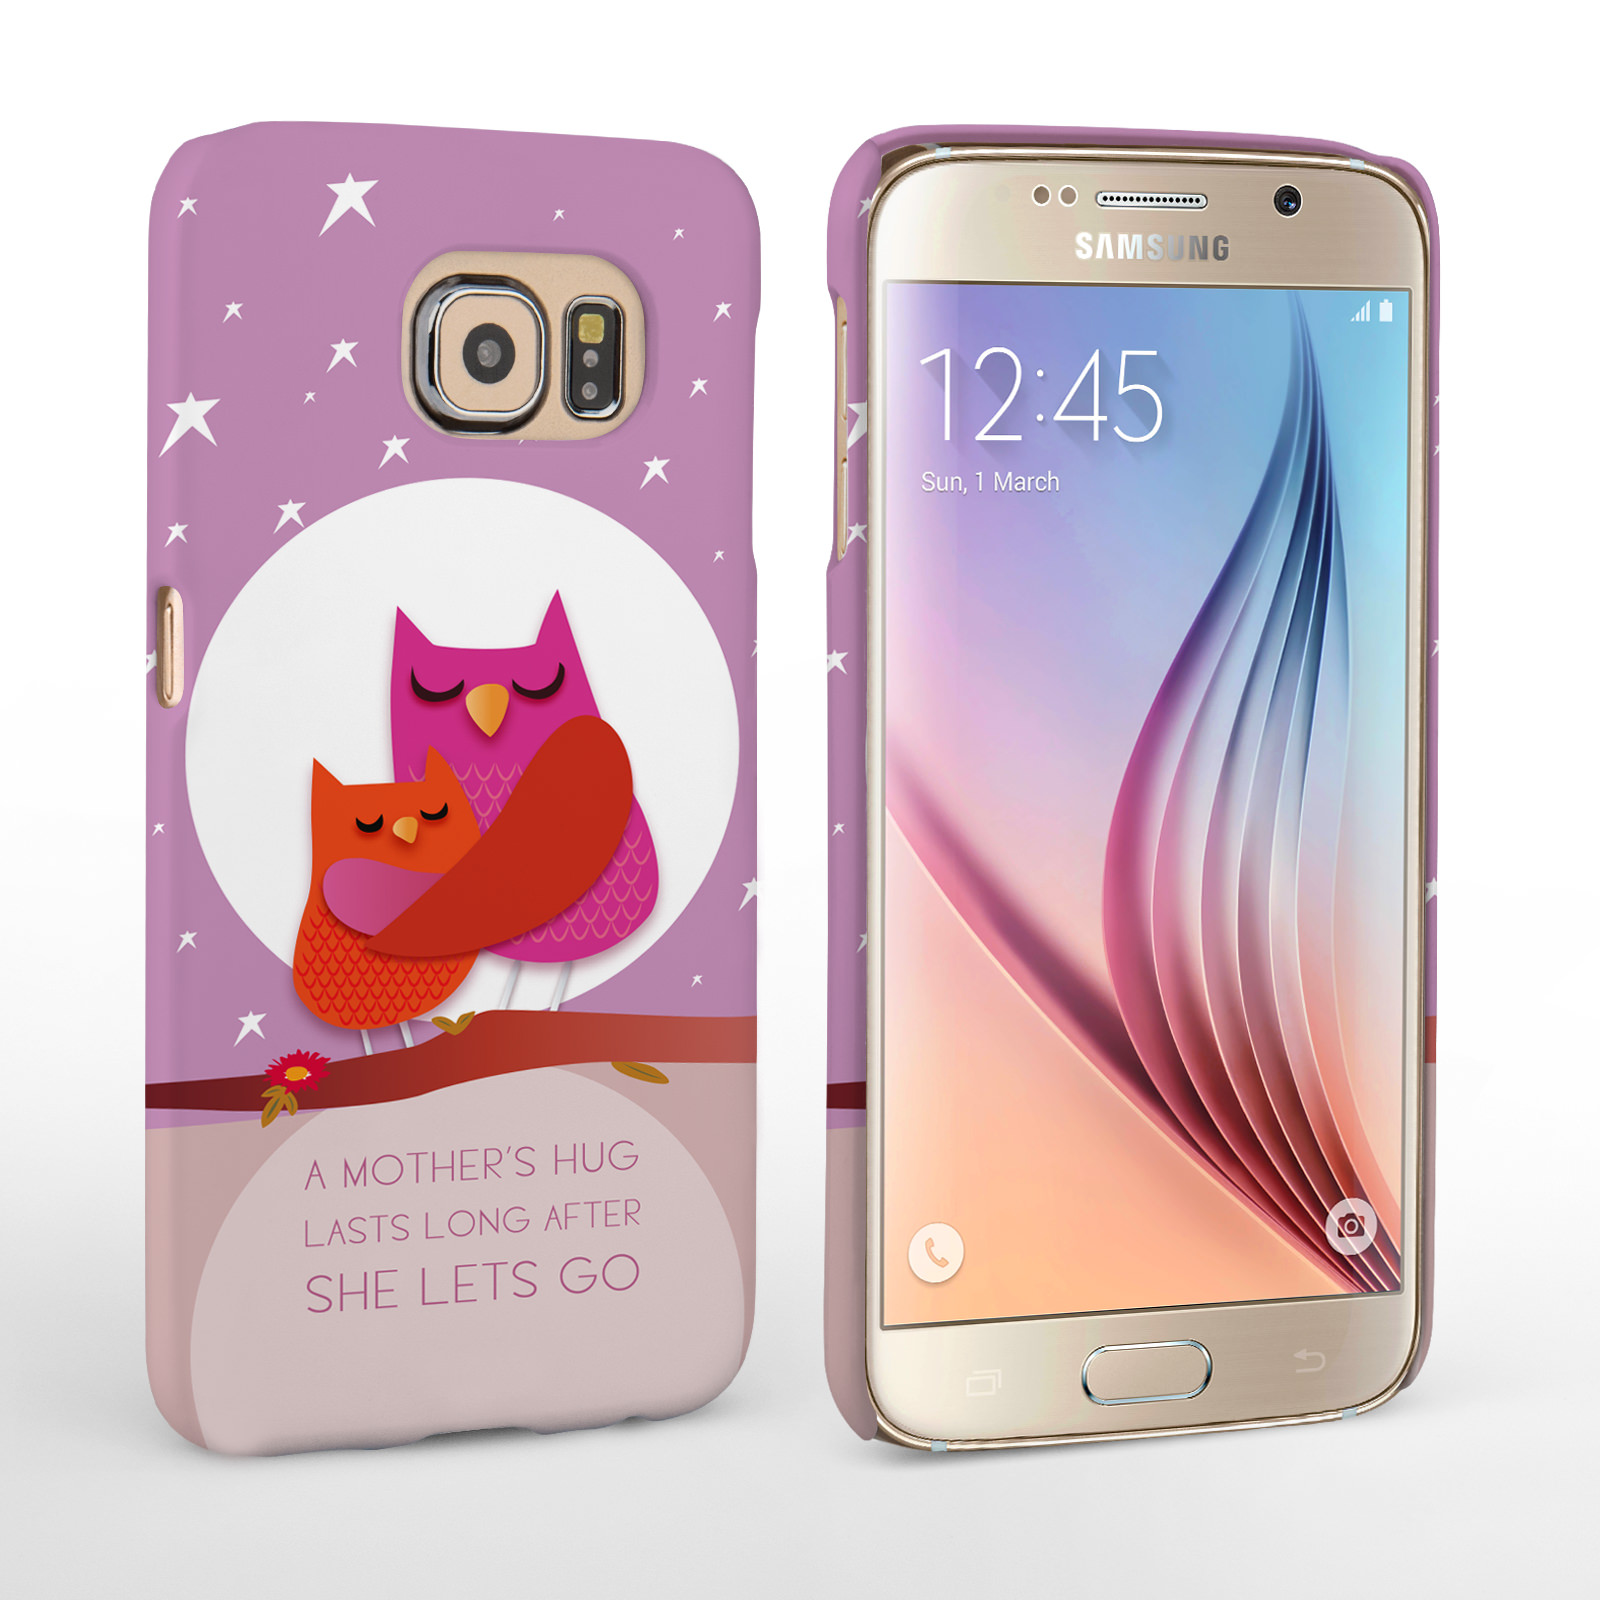 Caseflex Samsung Galaxy S6 Mummy Owl Hard Case – Purple and Pink